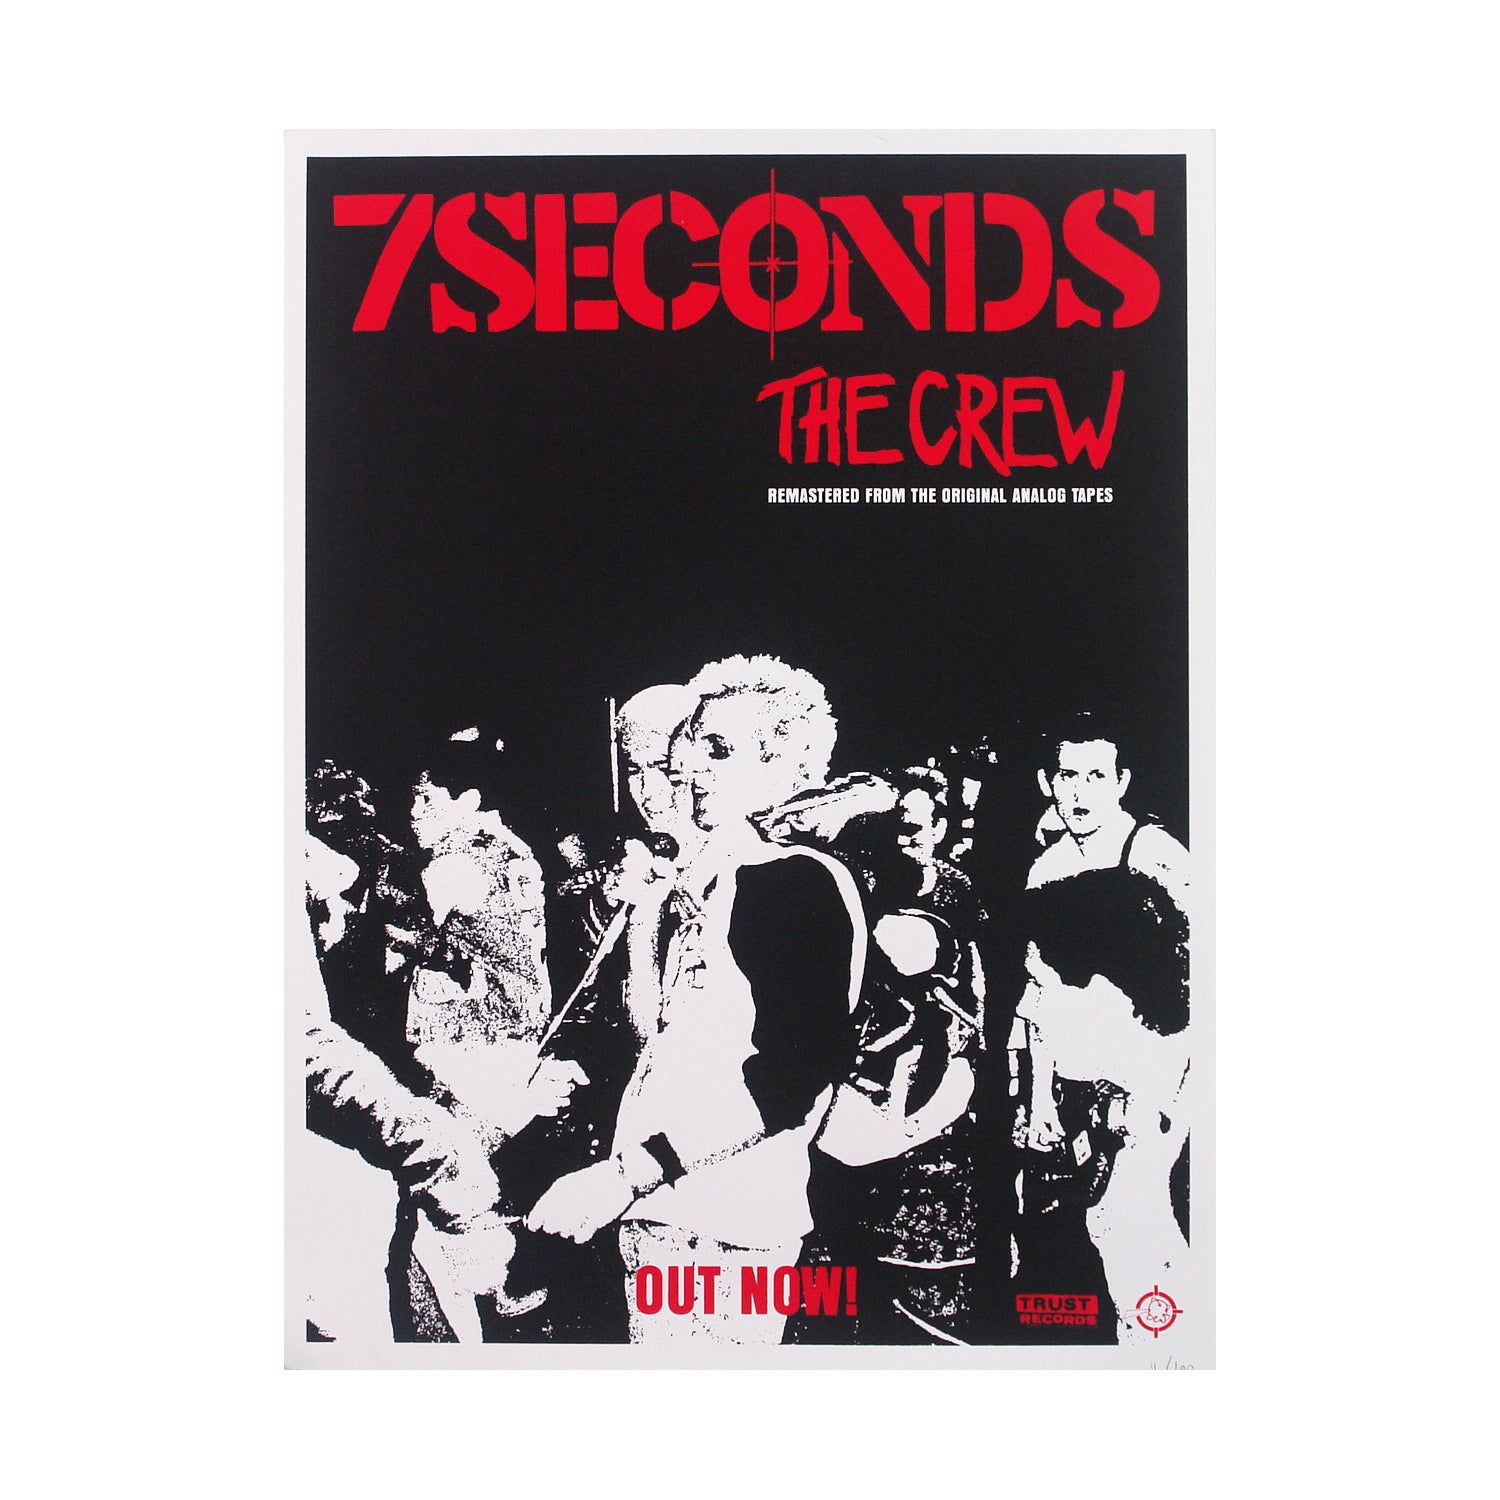 7 Seconds - Trust Records Company